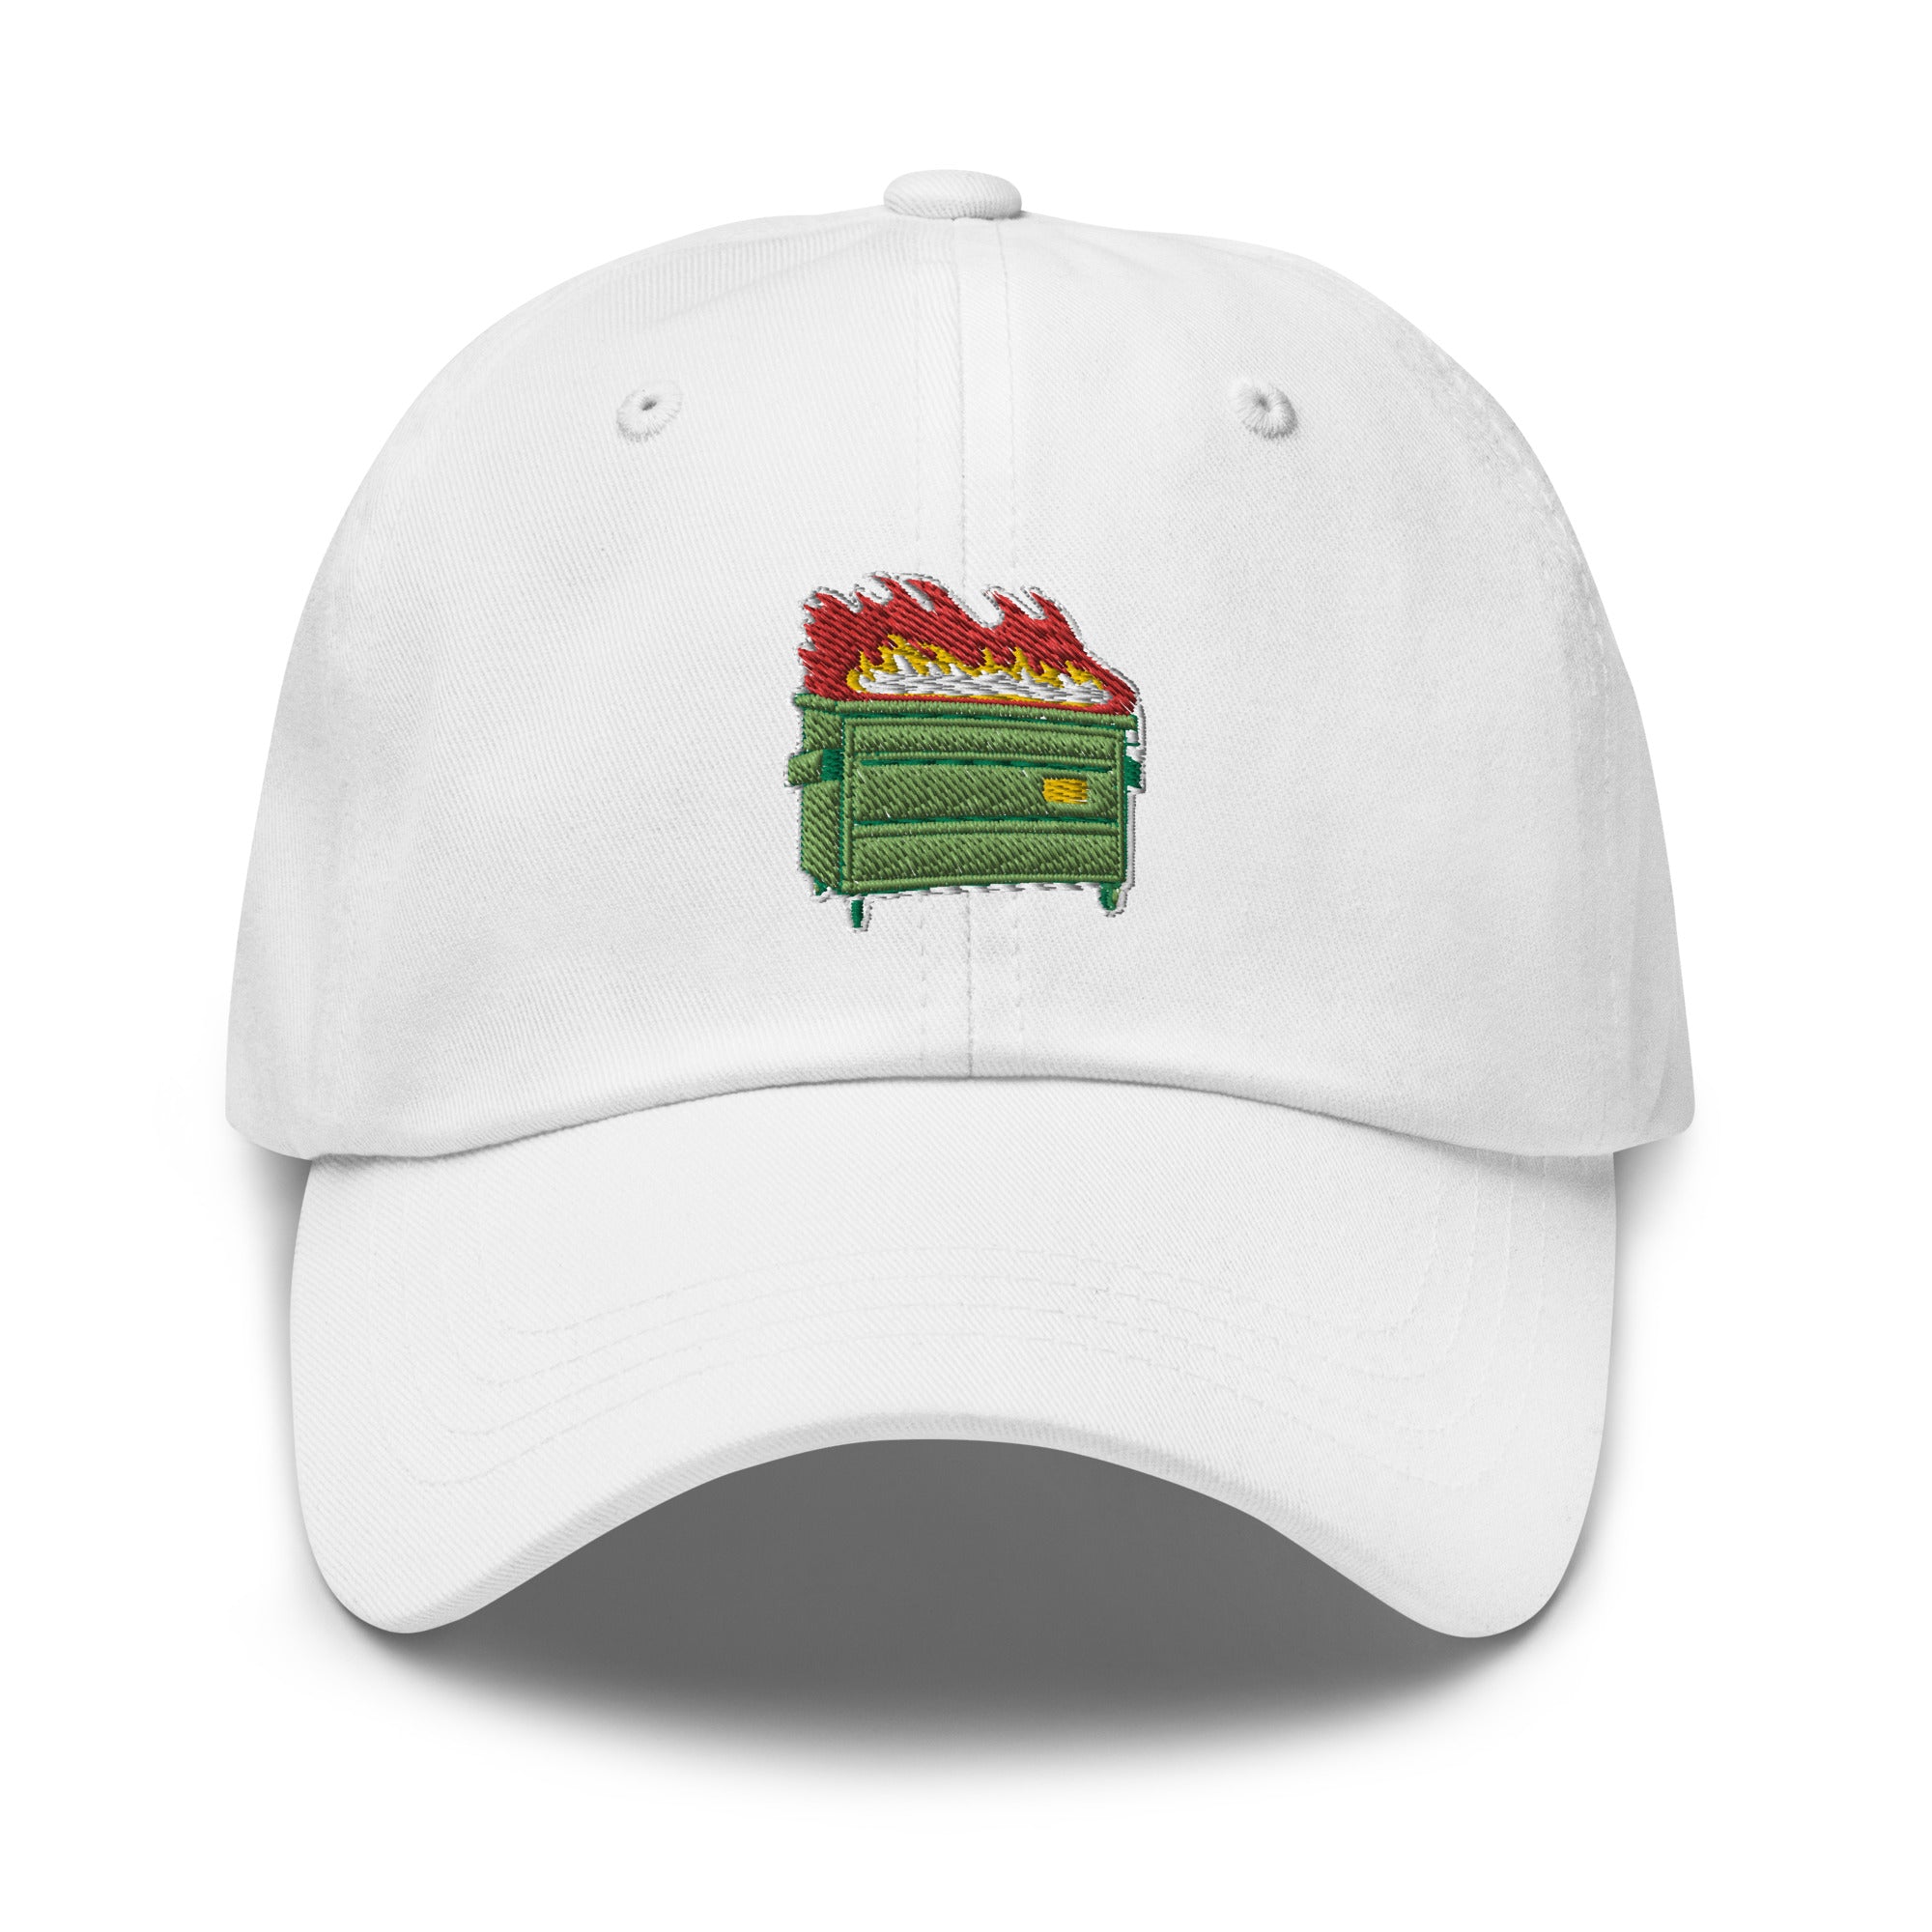 Dumpster Fire Dad hat